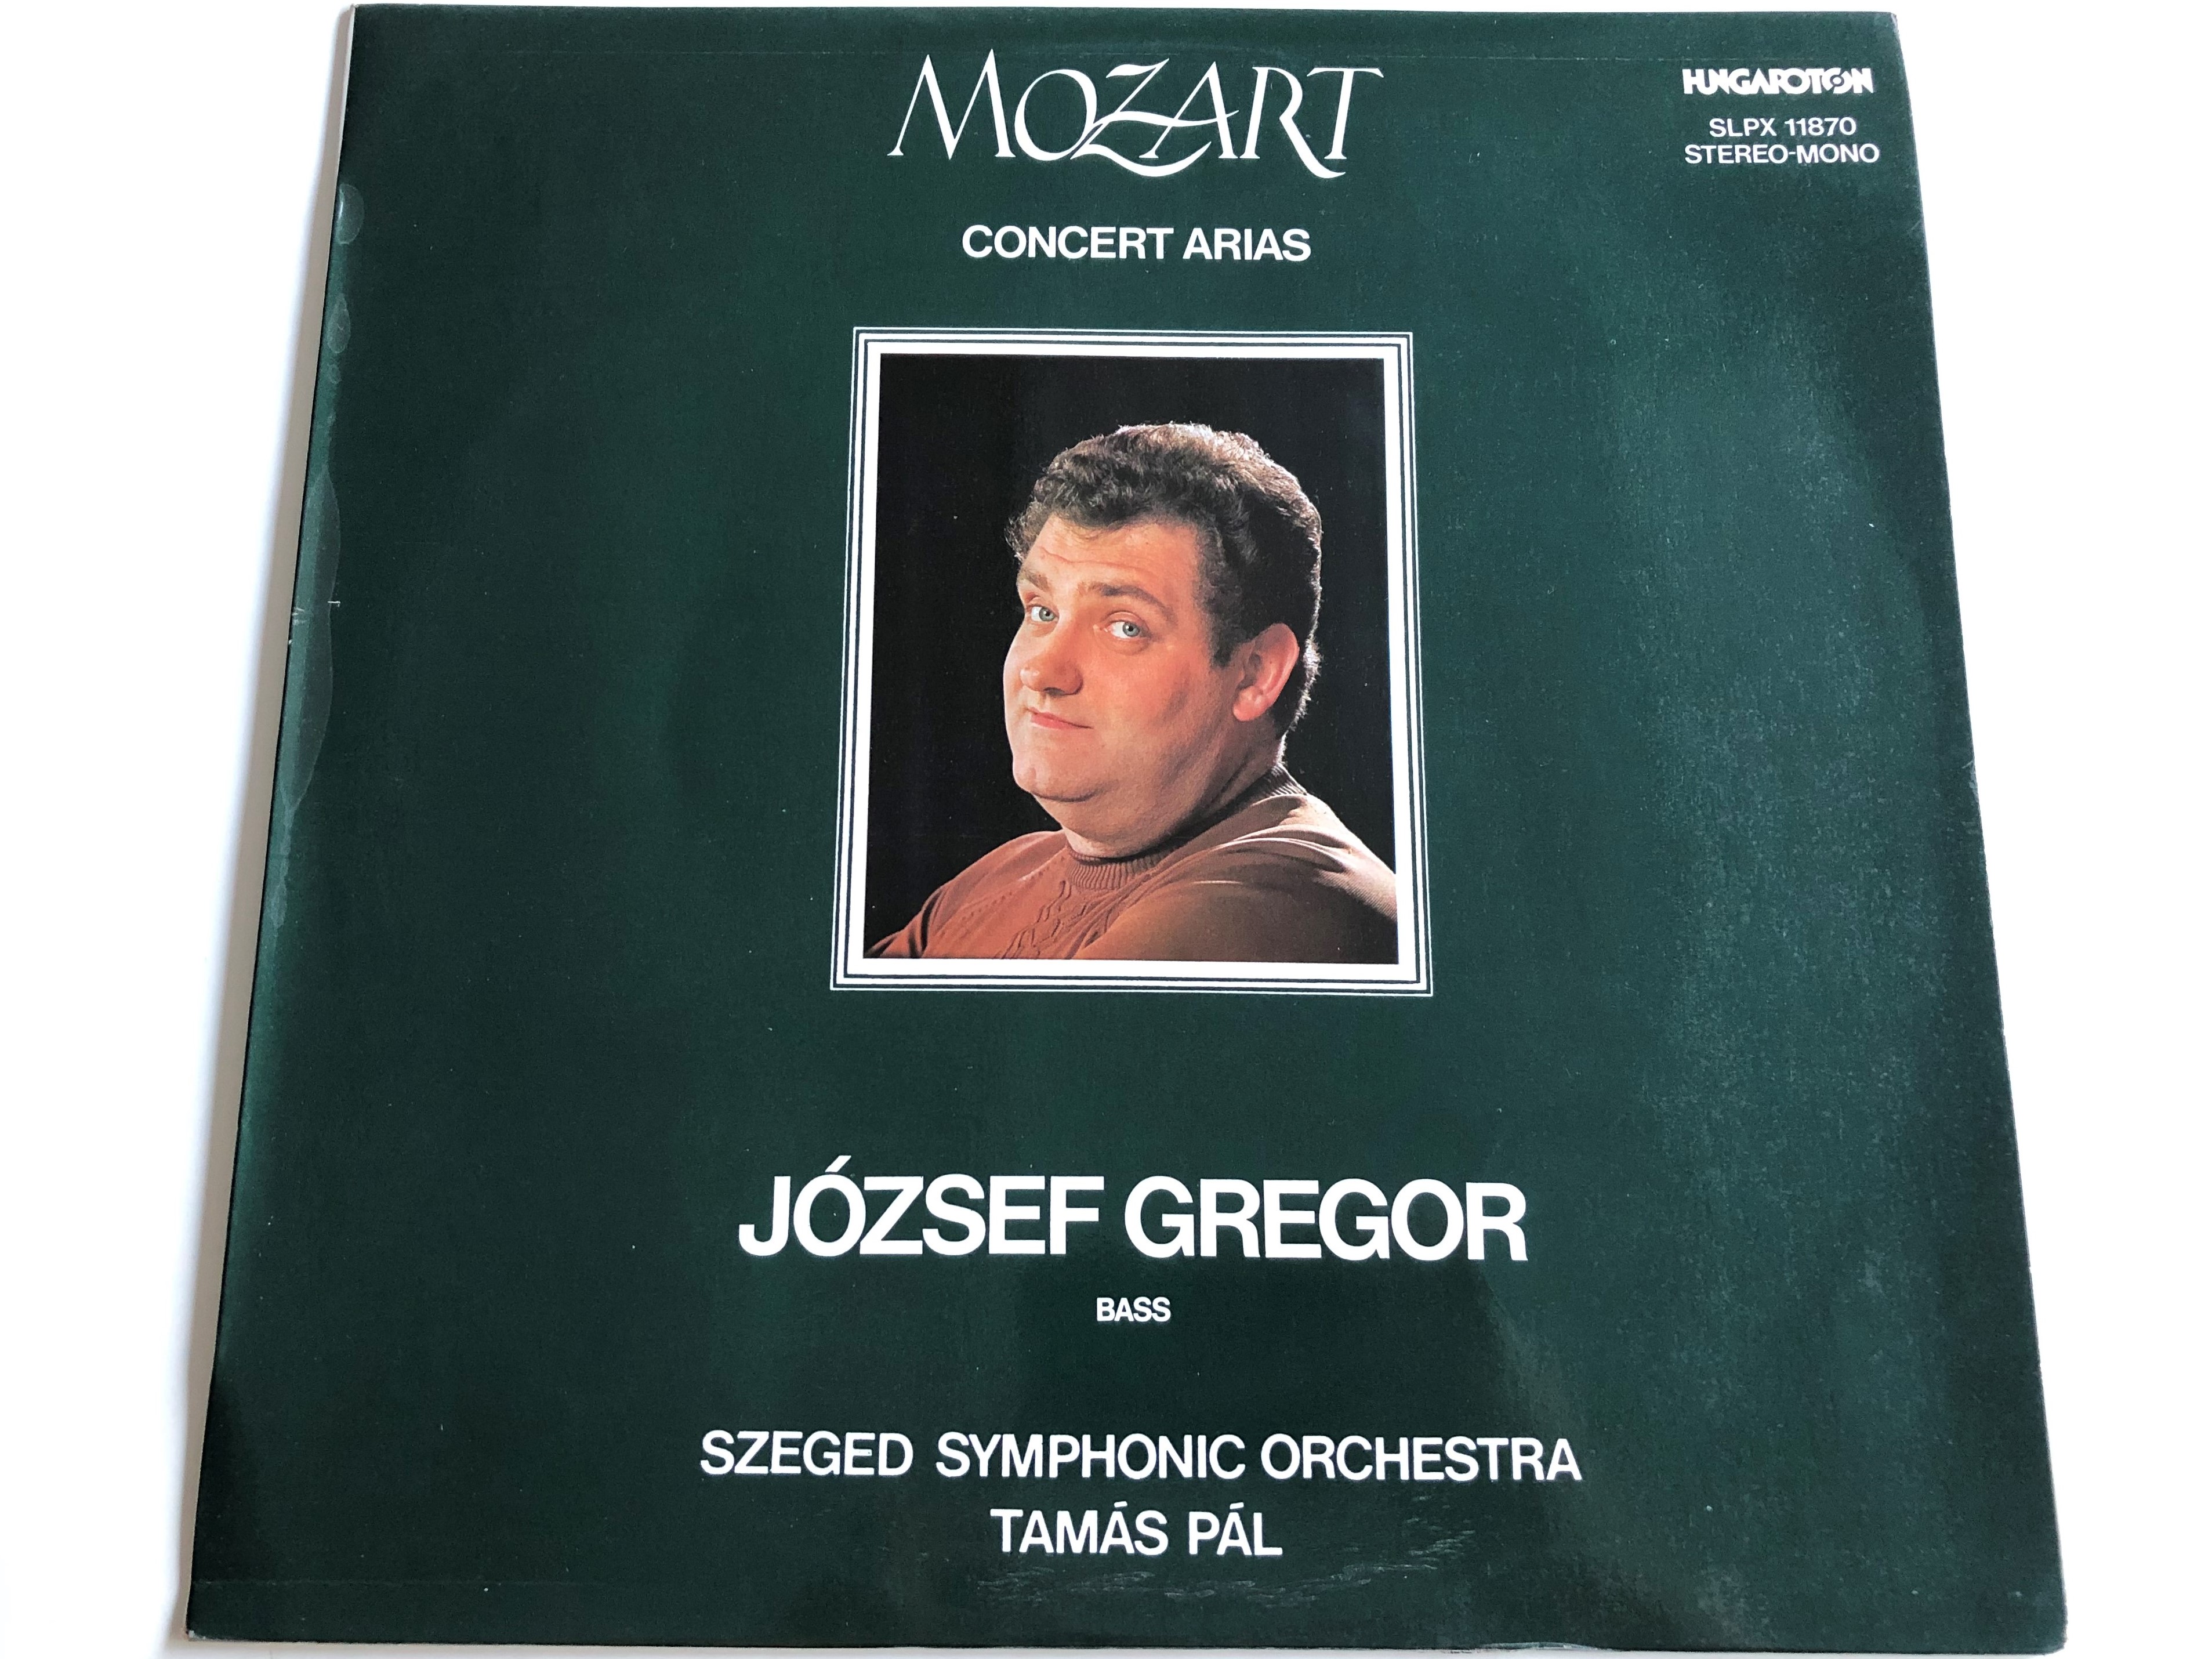 mozart-concert-arias-j-zsef-gregor-bass-szeged-symphonyc-orchestra-tam-s-p-l-hungaroton-lp-stereo-mono-slpx-11870-1-.jpg